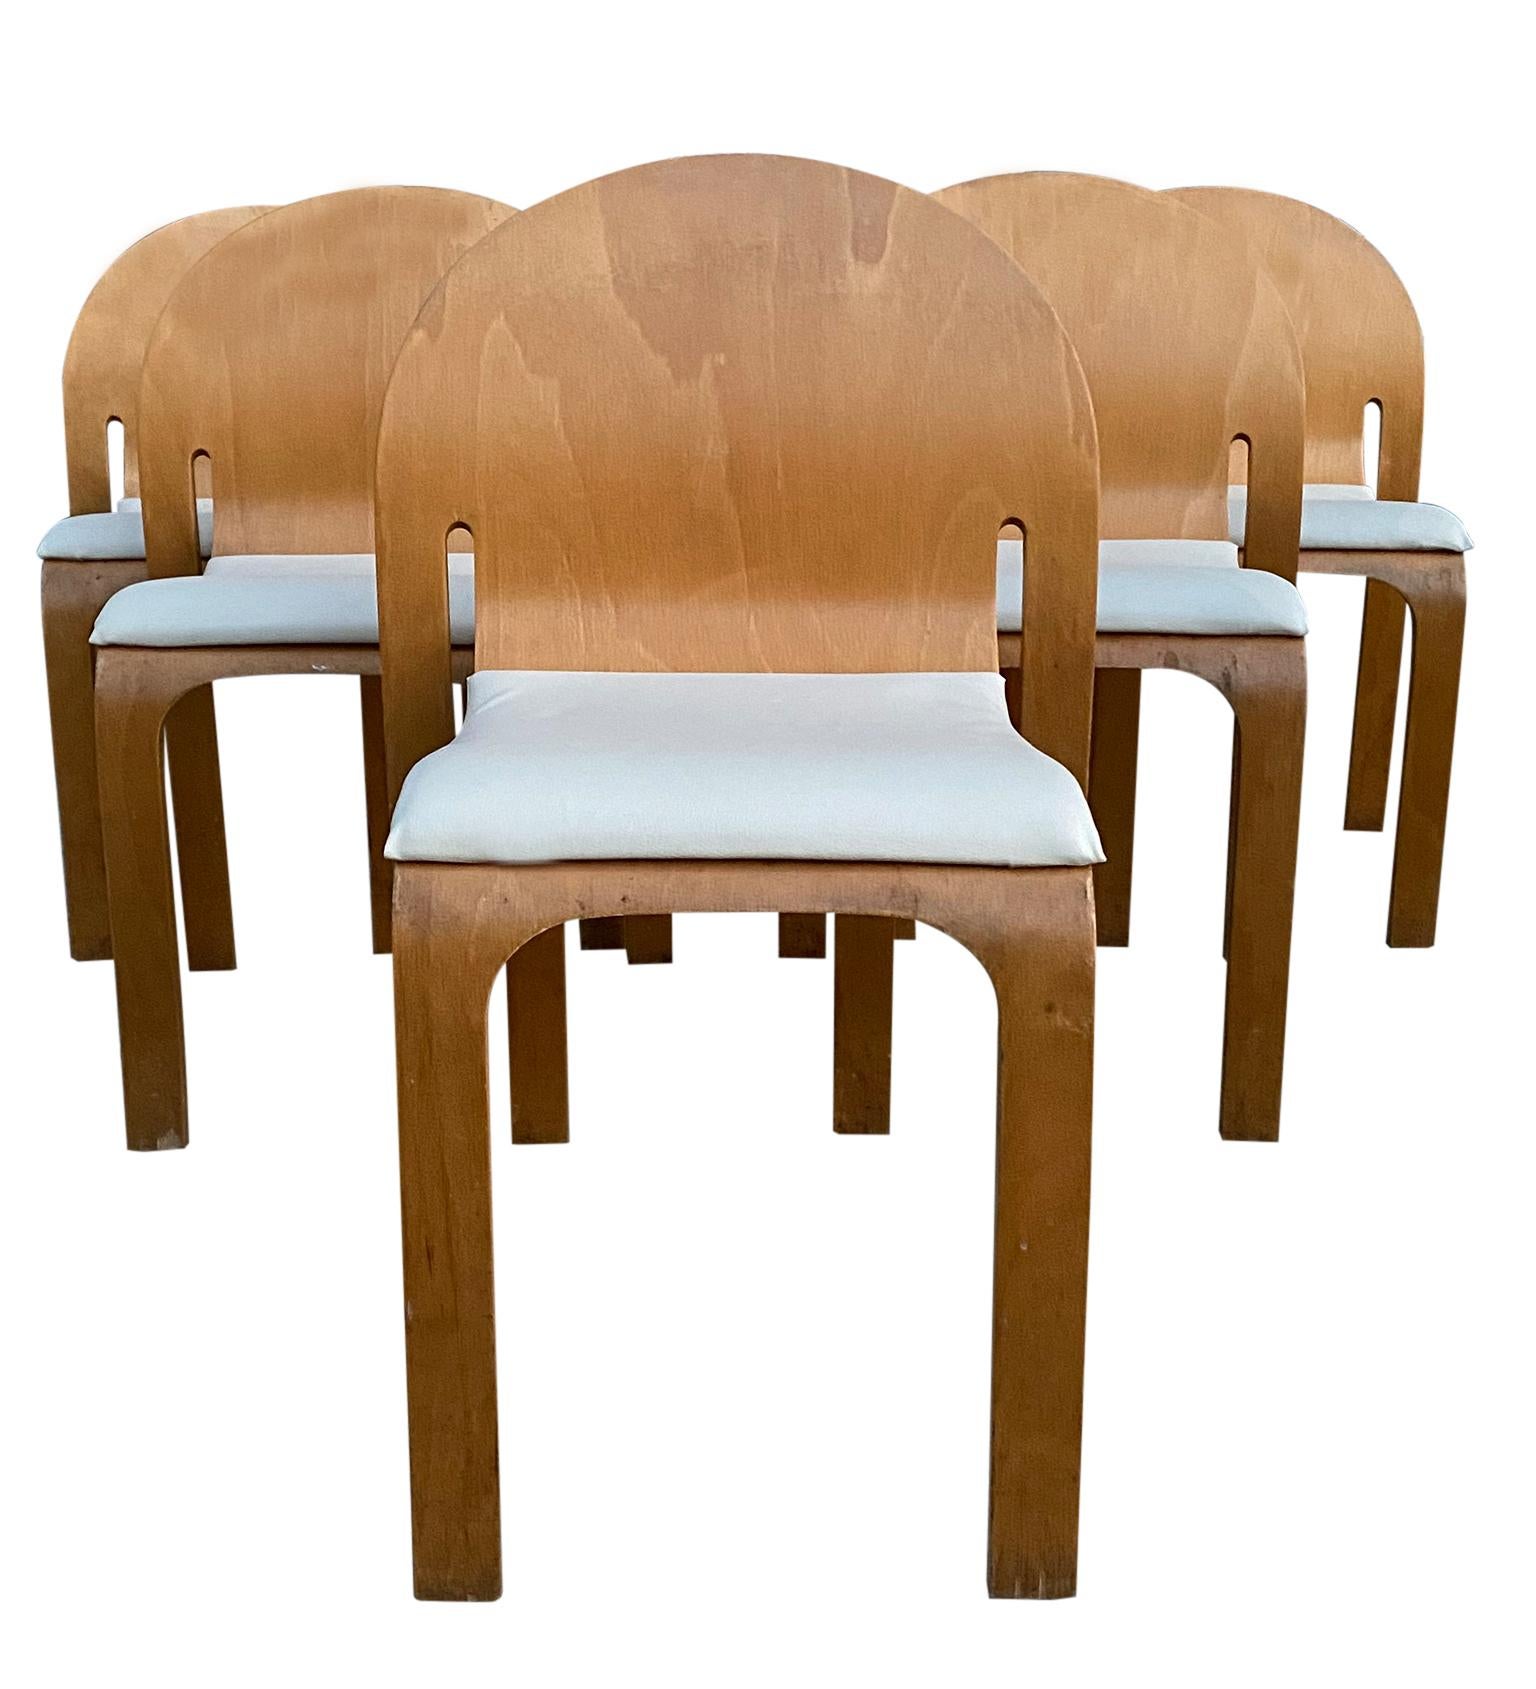 Maple Rare Peter Danko Design Mid-Century Modern Dining Table '6' Chairs Bent Wood